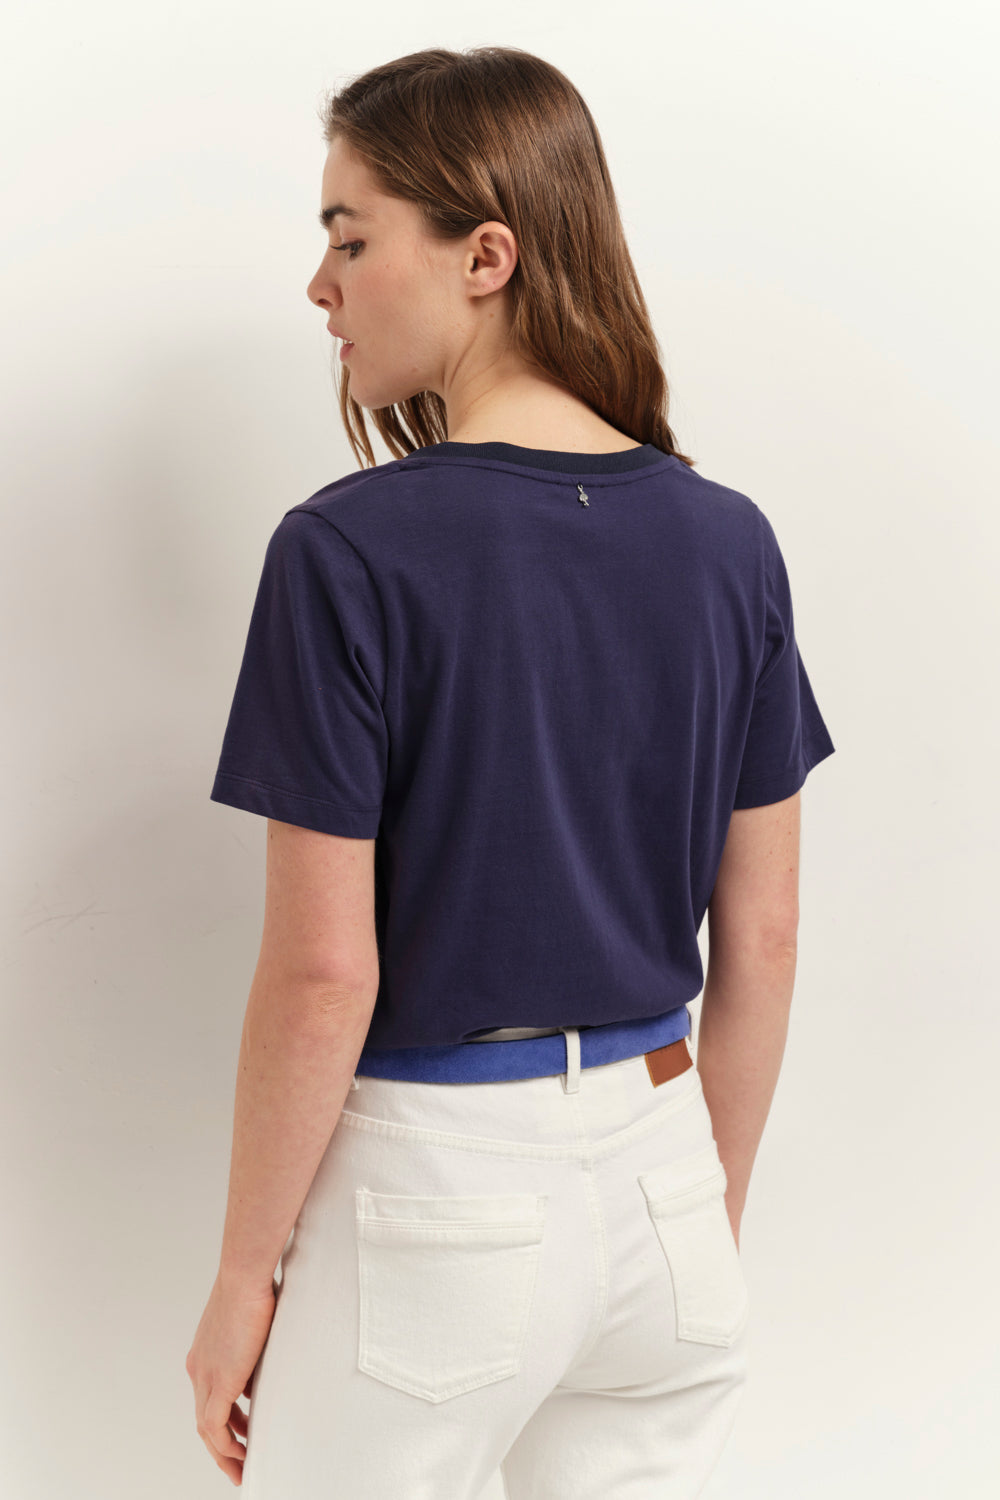 MADIAN - T-shirt estate blue coton bio visuel danseuse futuriste